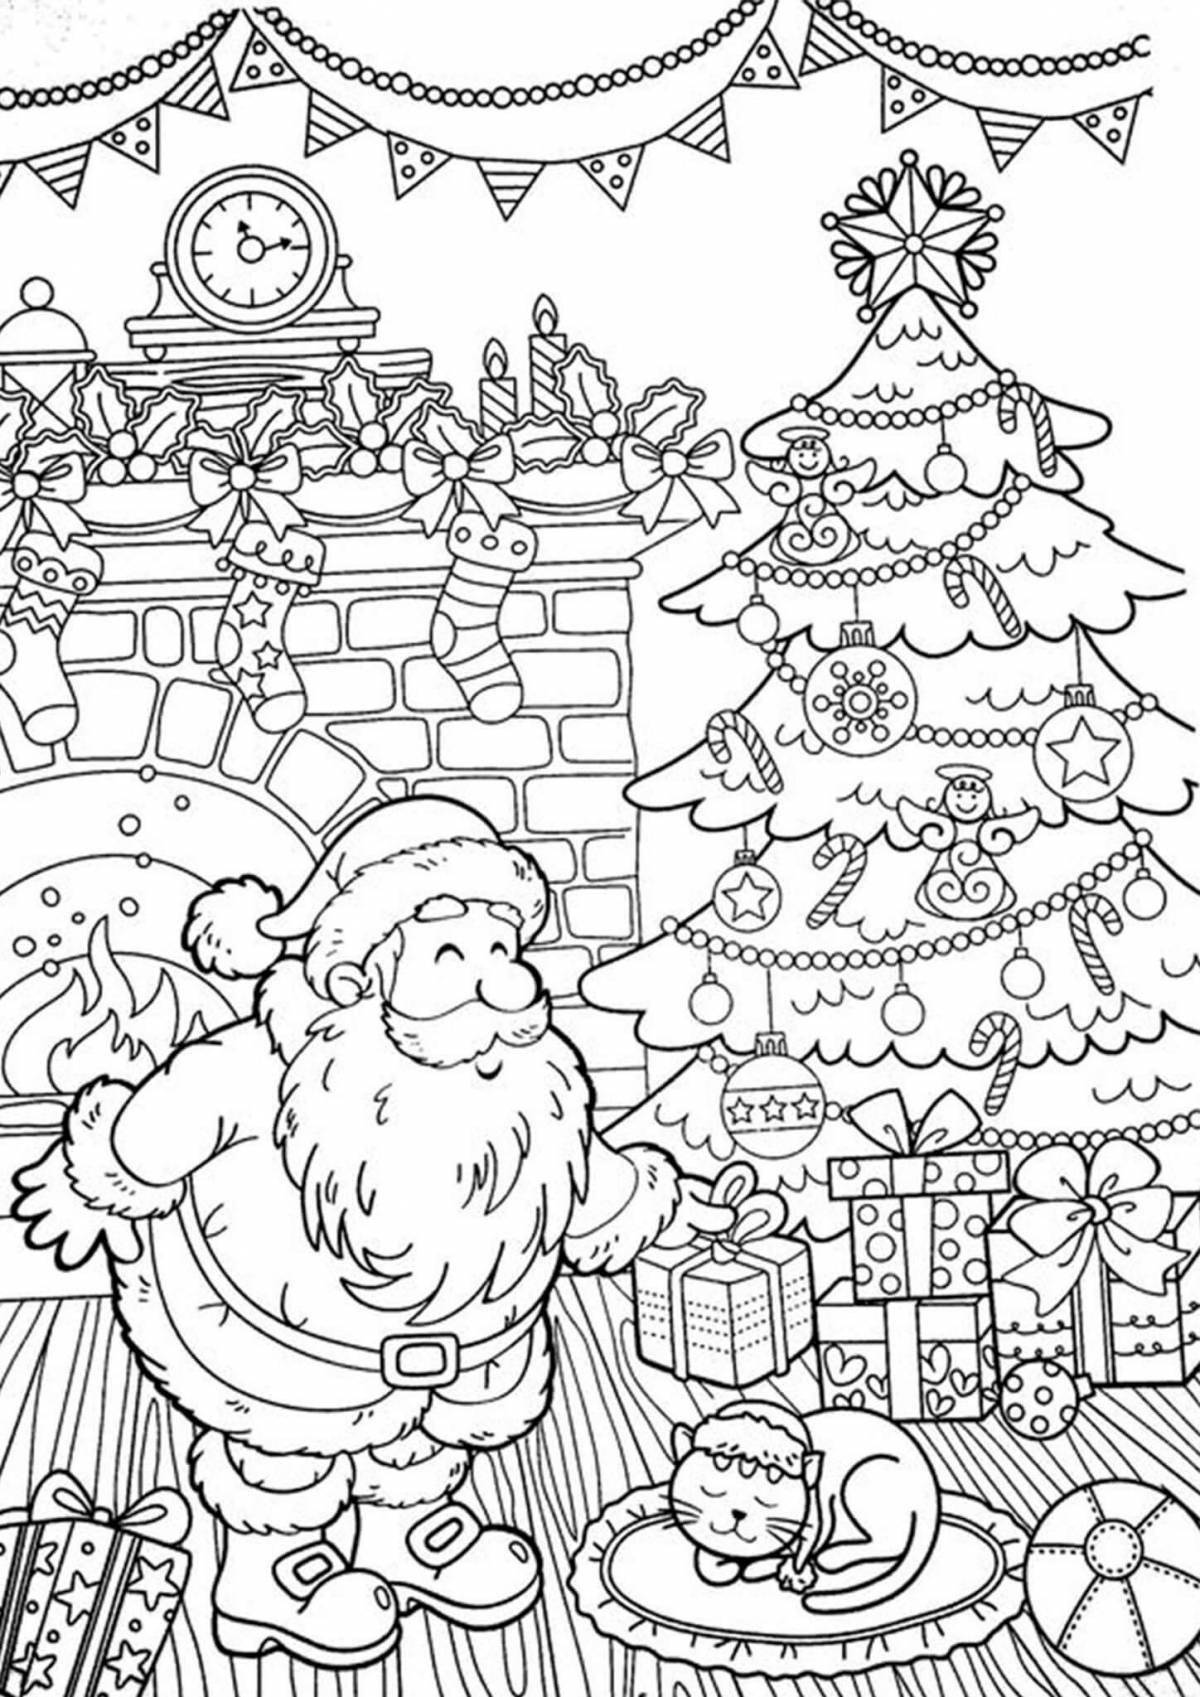 Joyful big Christmas coloring book